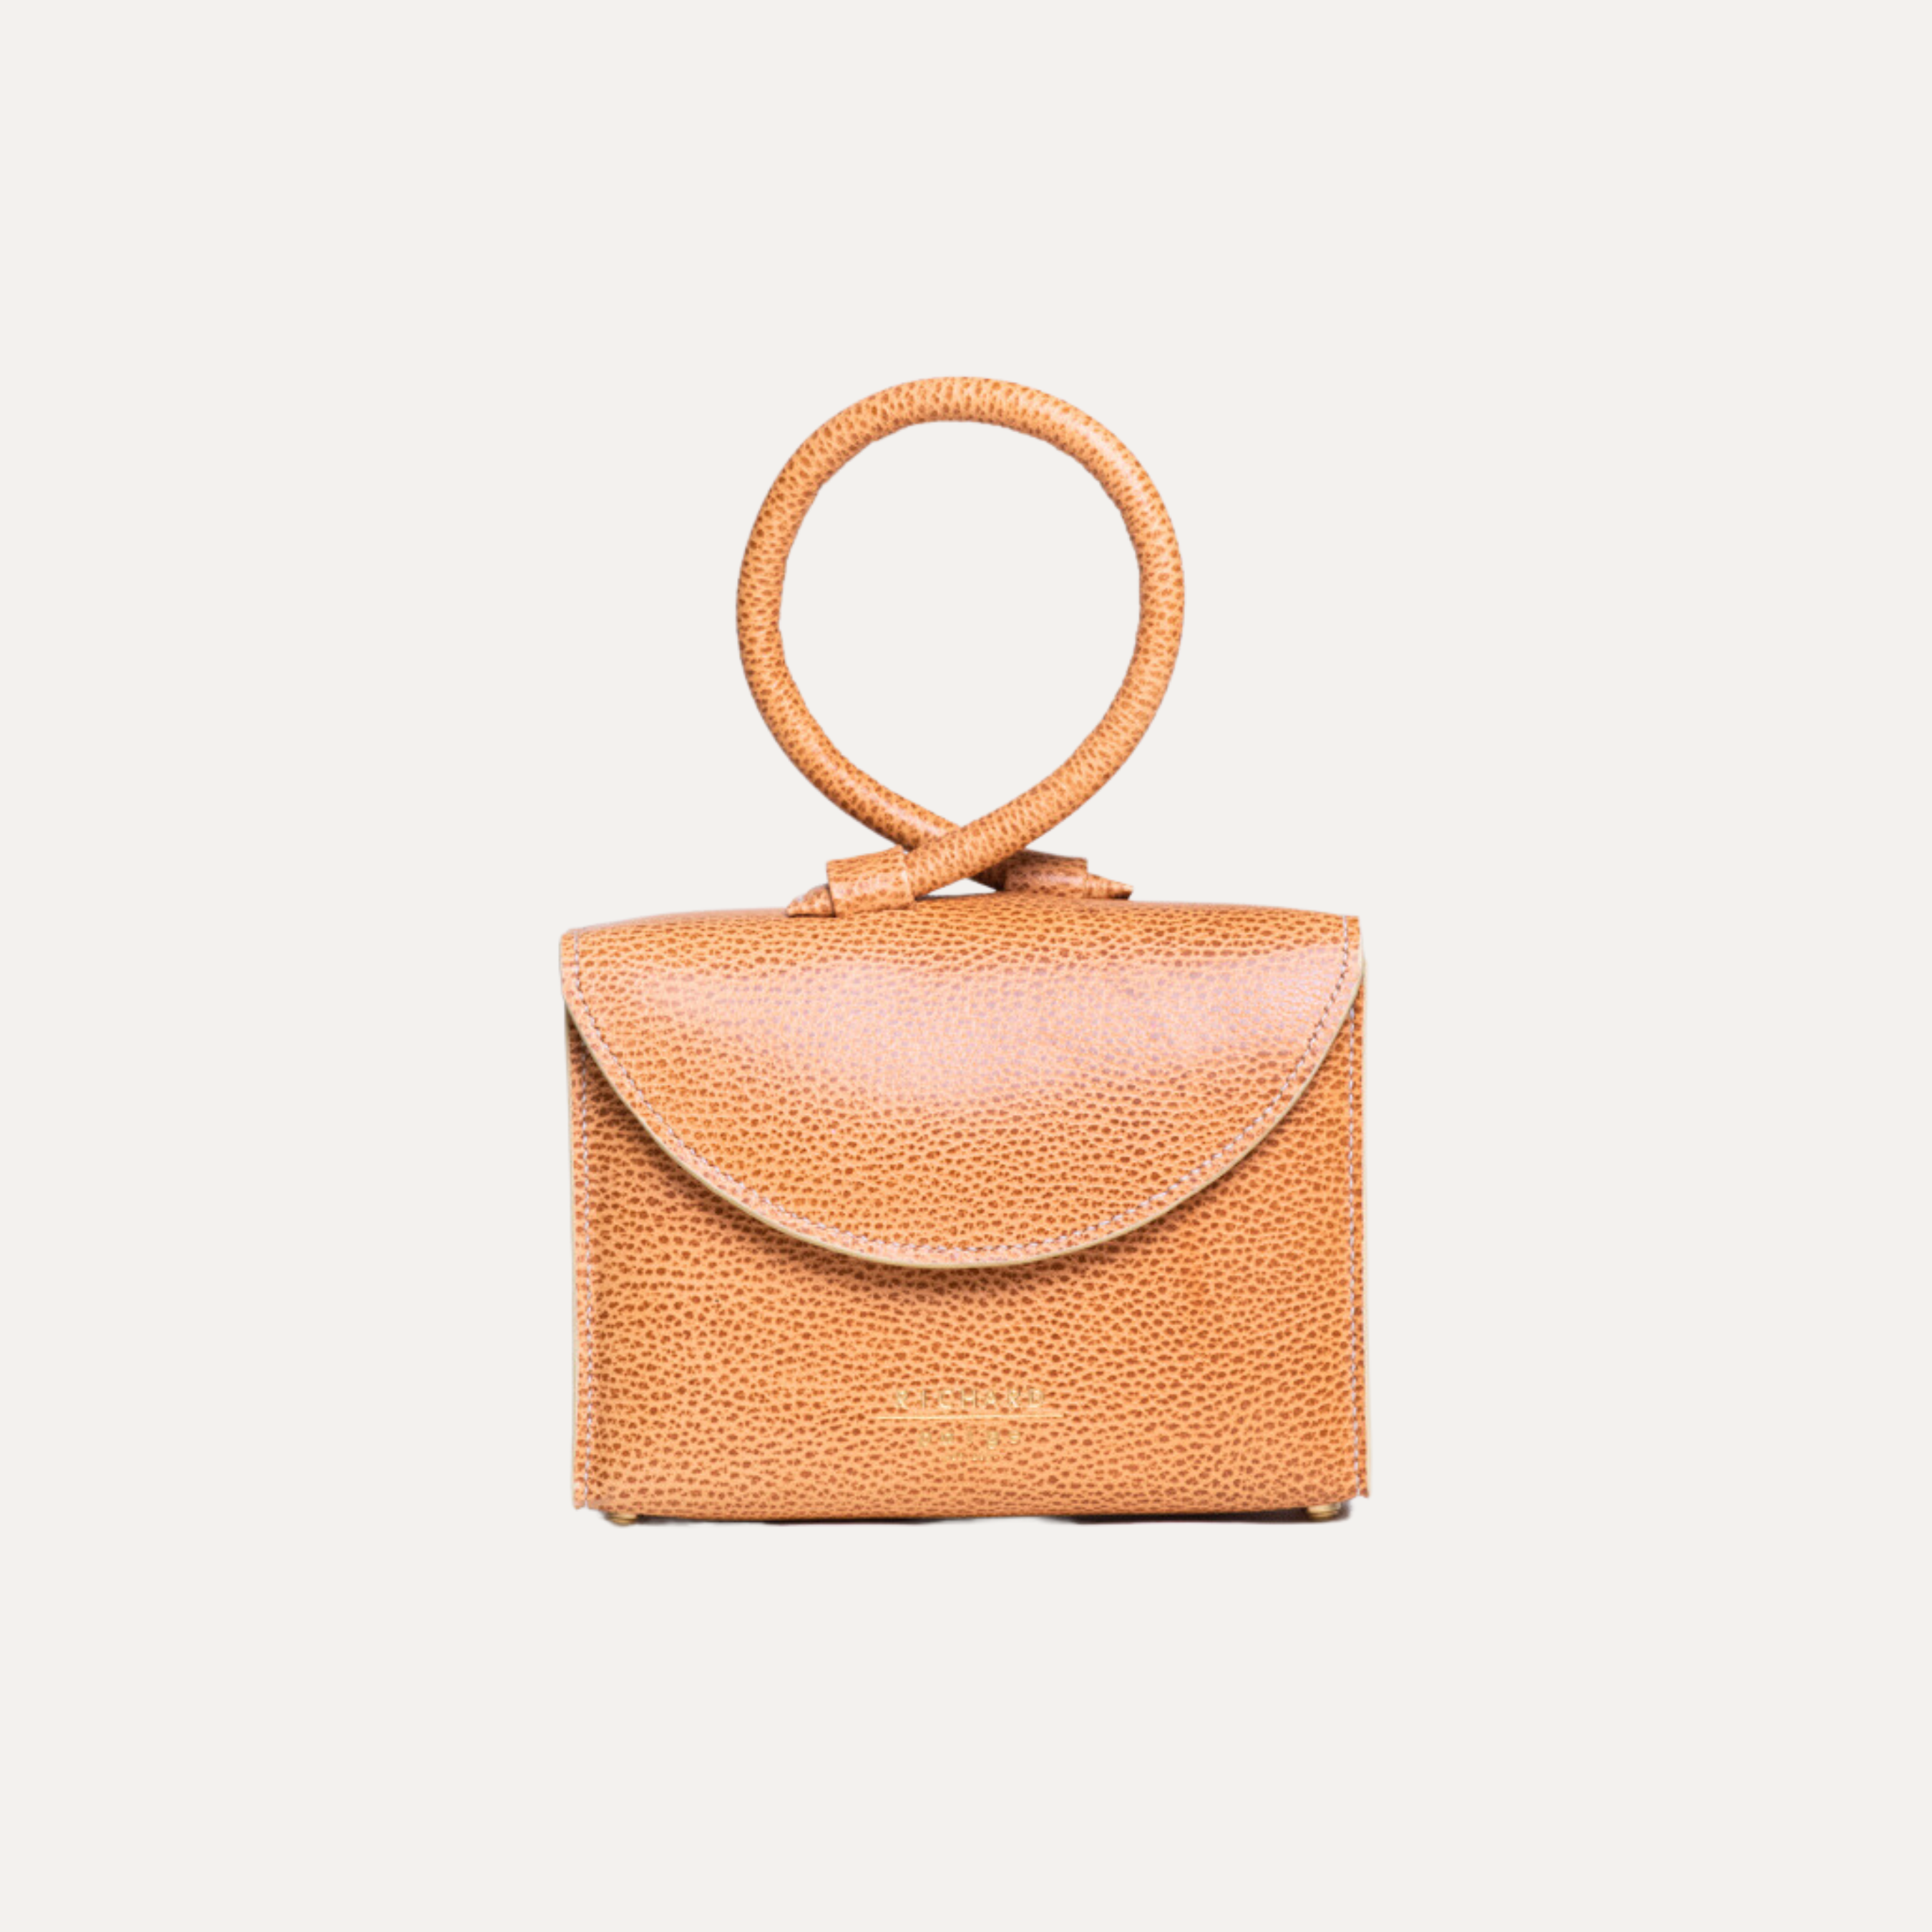 Pebbled Natural Italian Leather Loop Handle Handbag Made in Australia